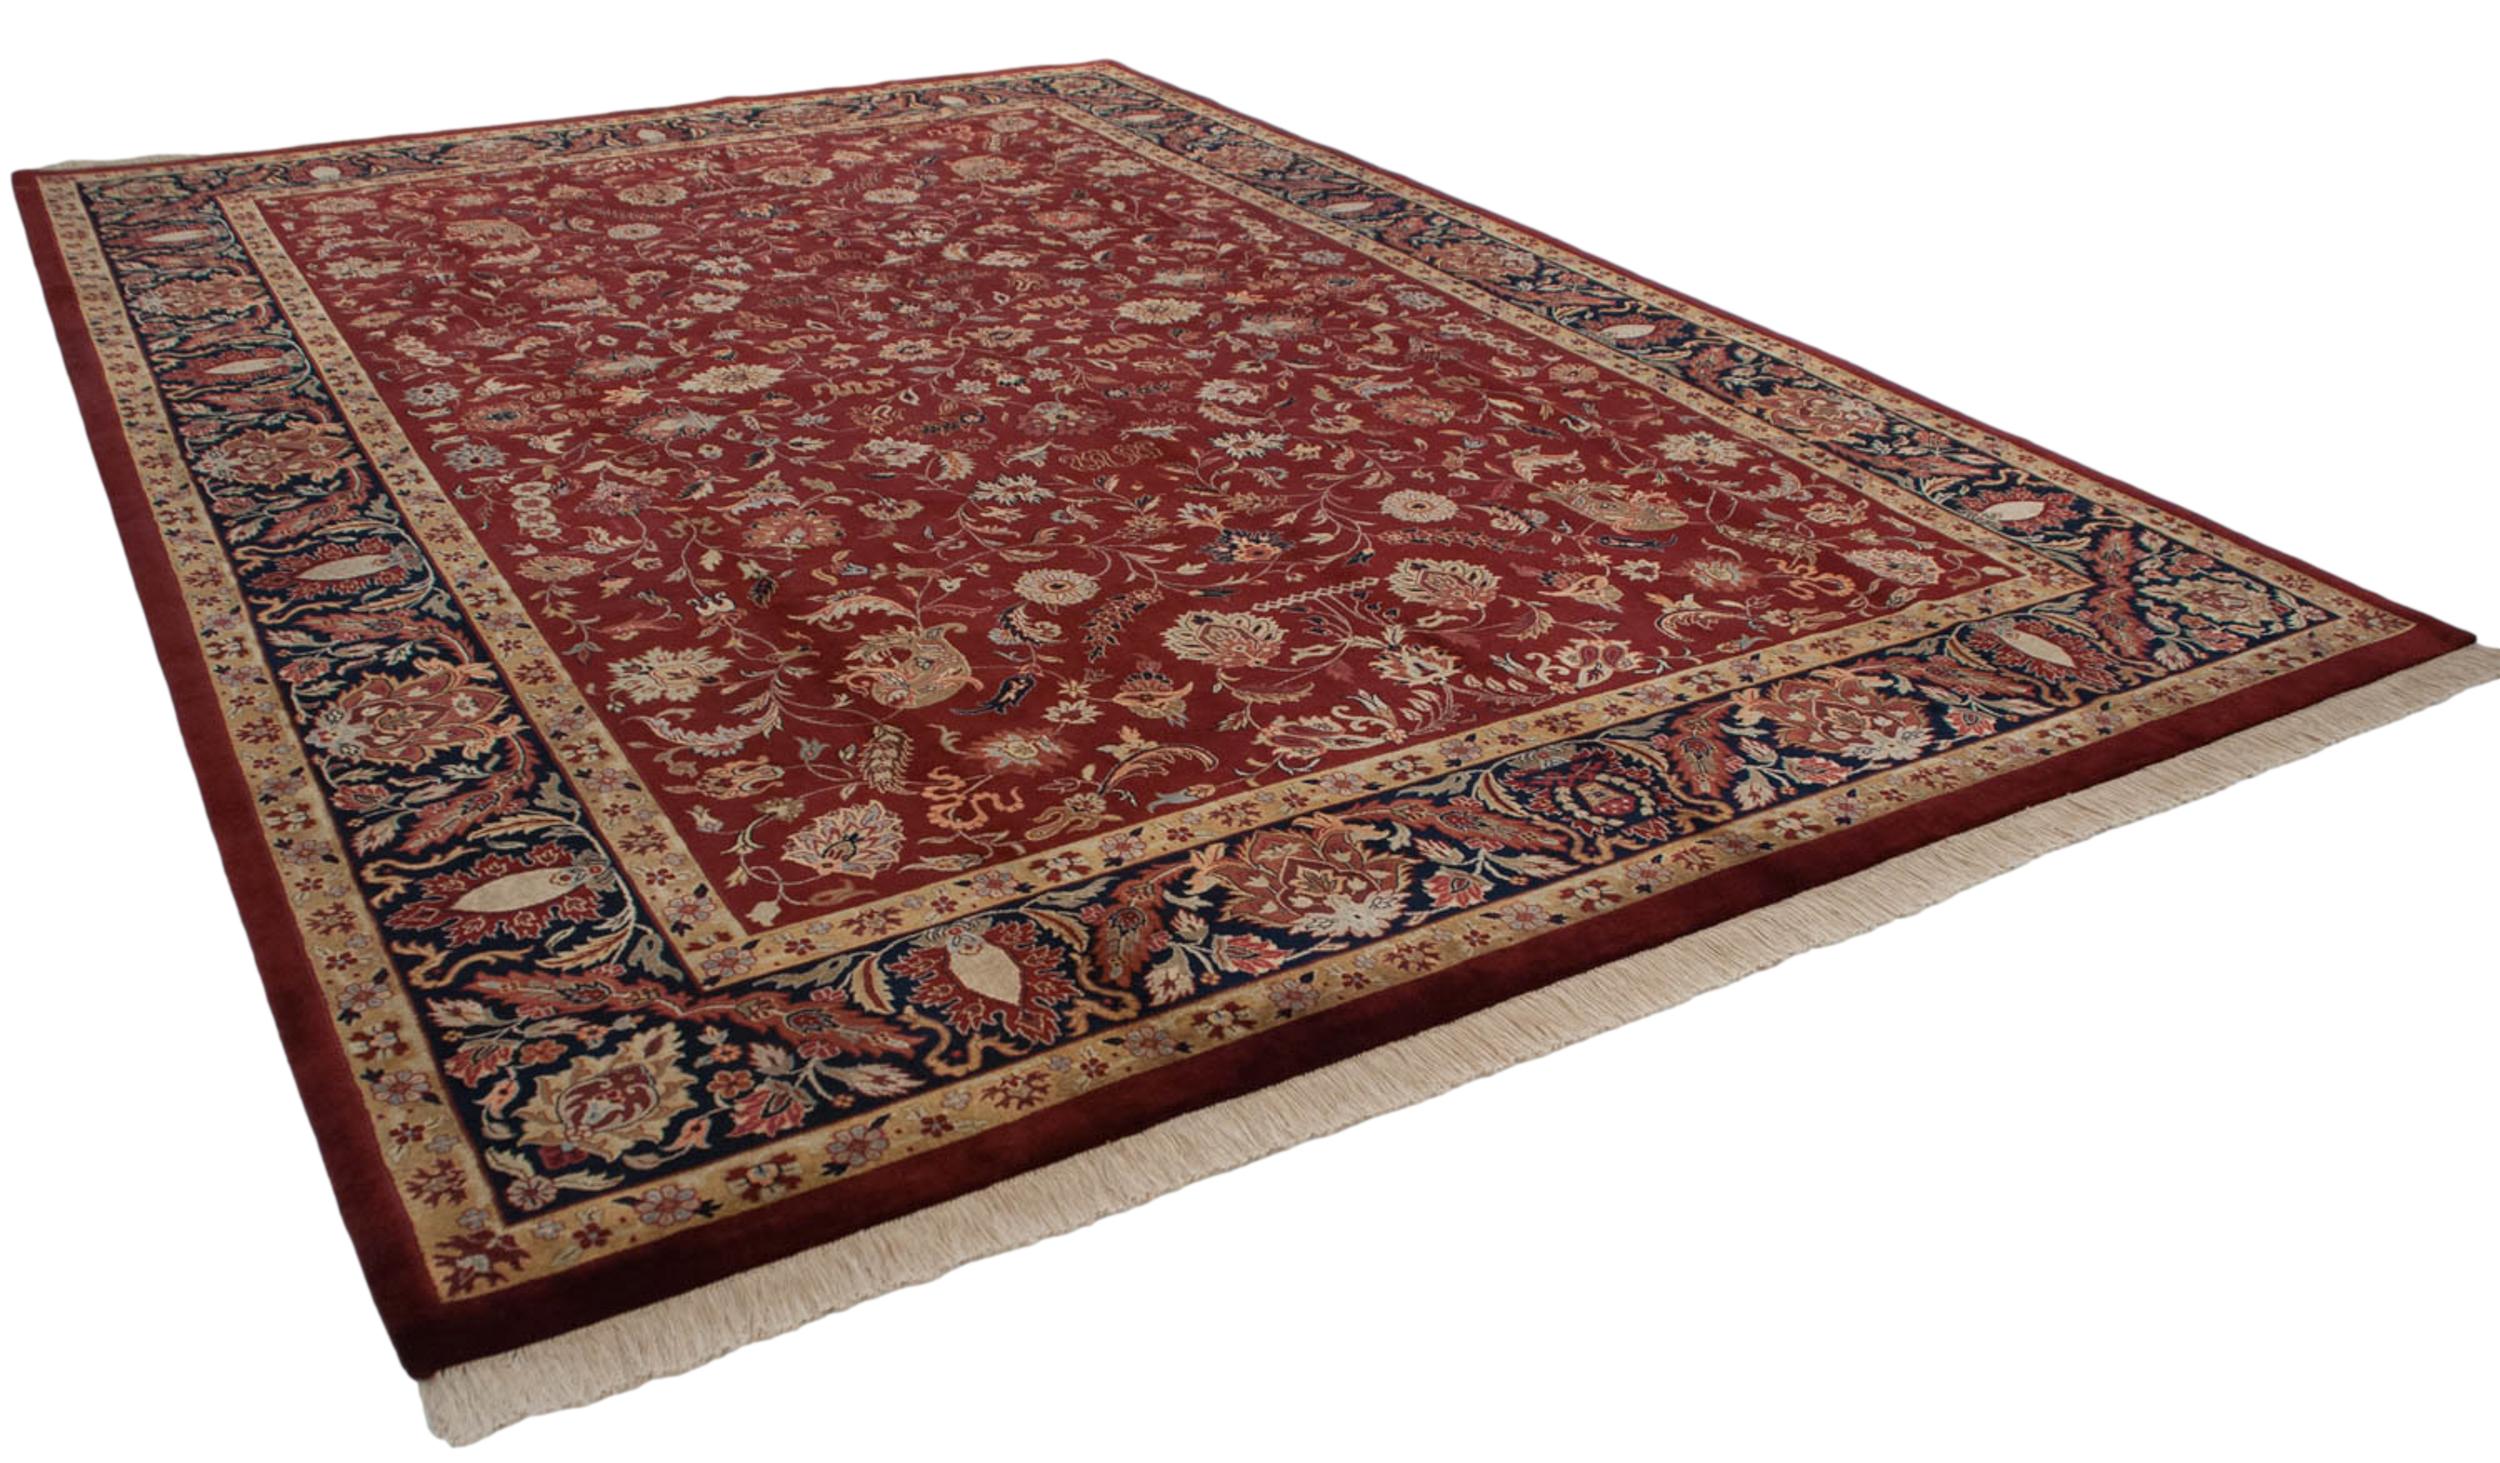 Other Fine Indian Mohajeran Sarouk Design Carpet For Sale